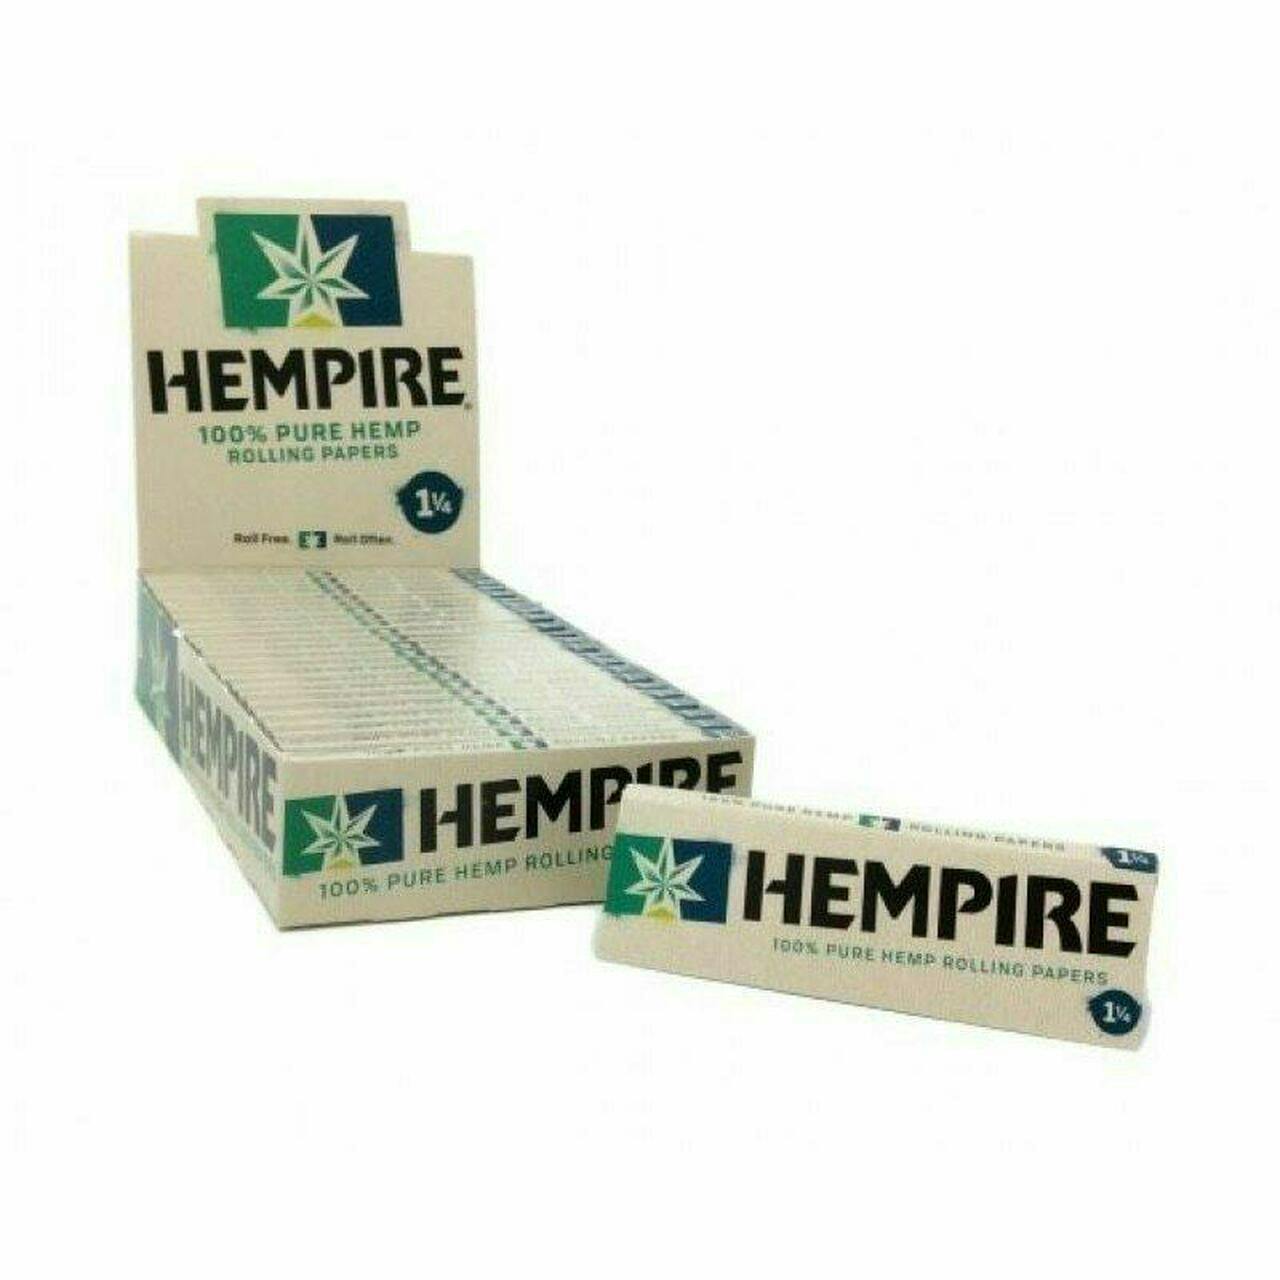 Hempire 100% Pure Hemp Rolling Papers 1 1/4